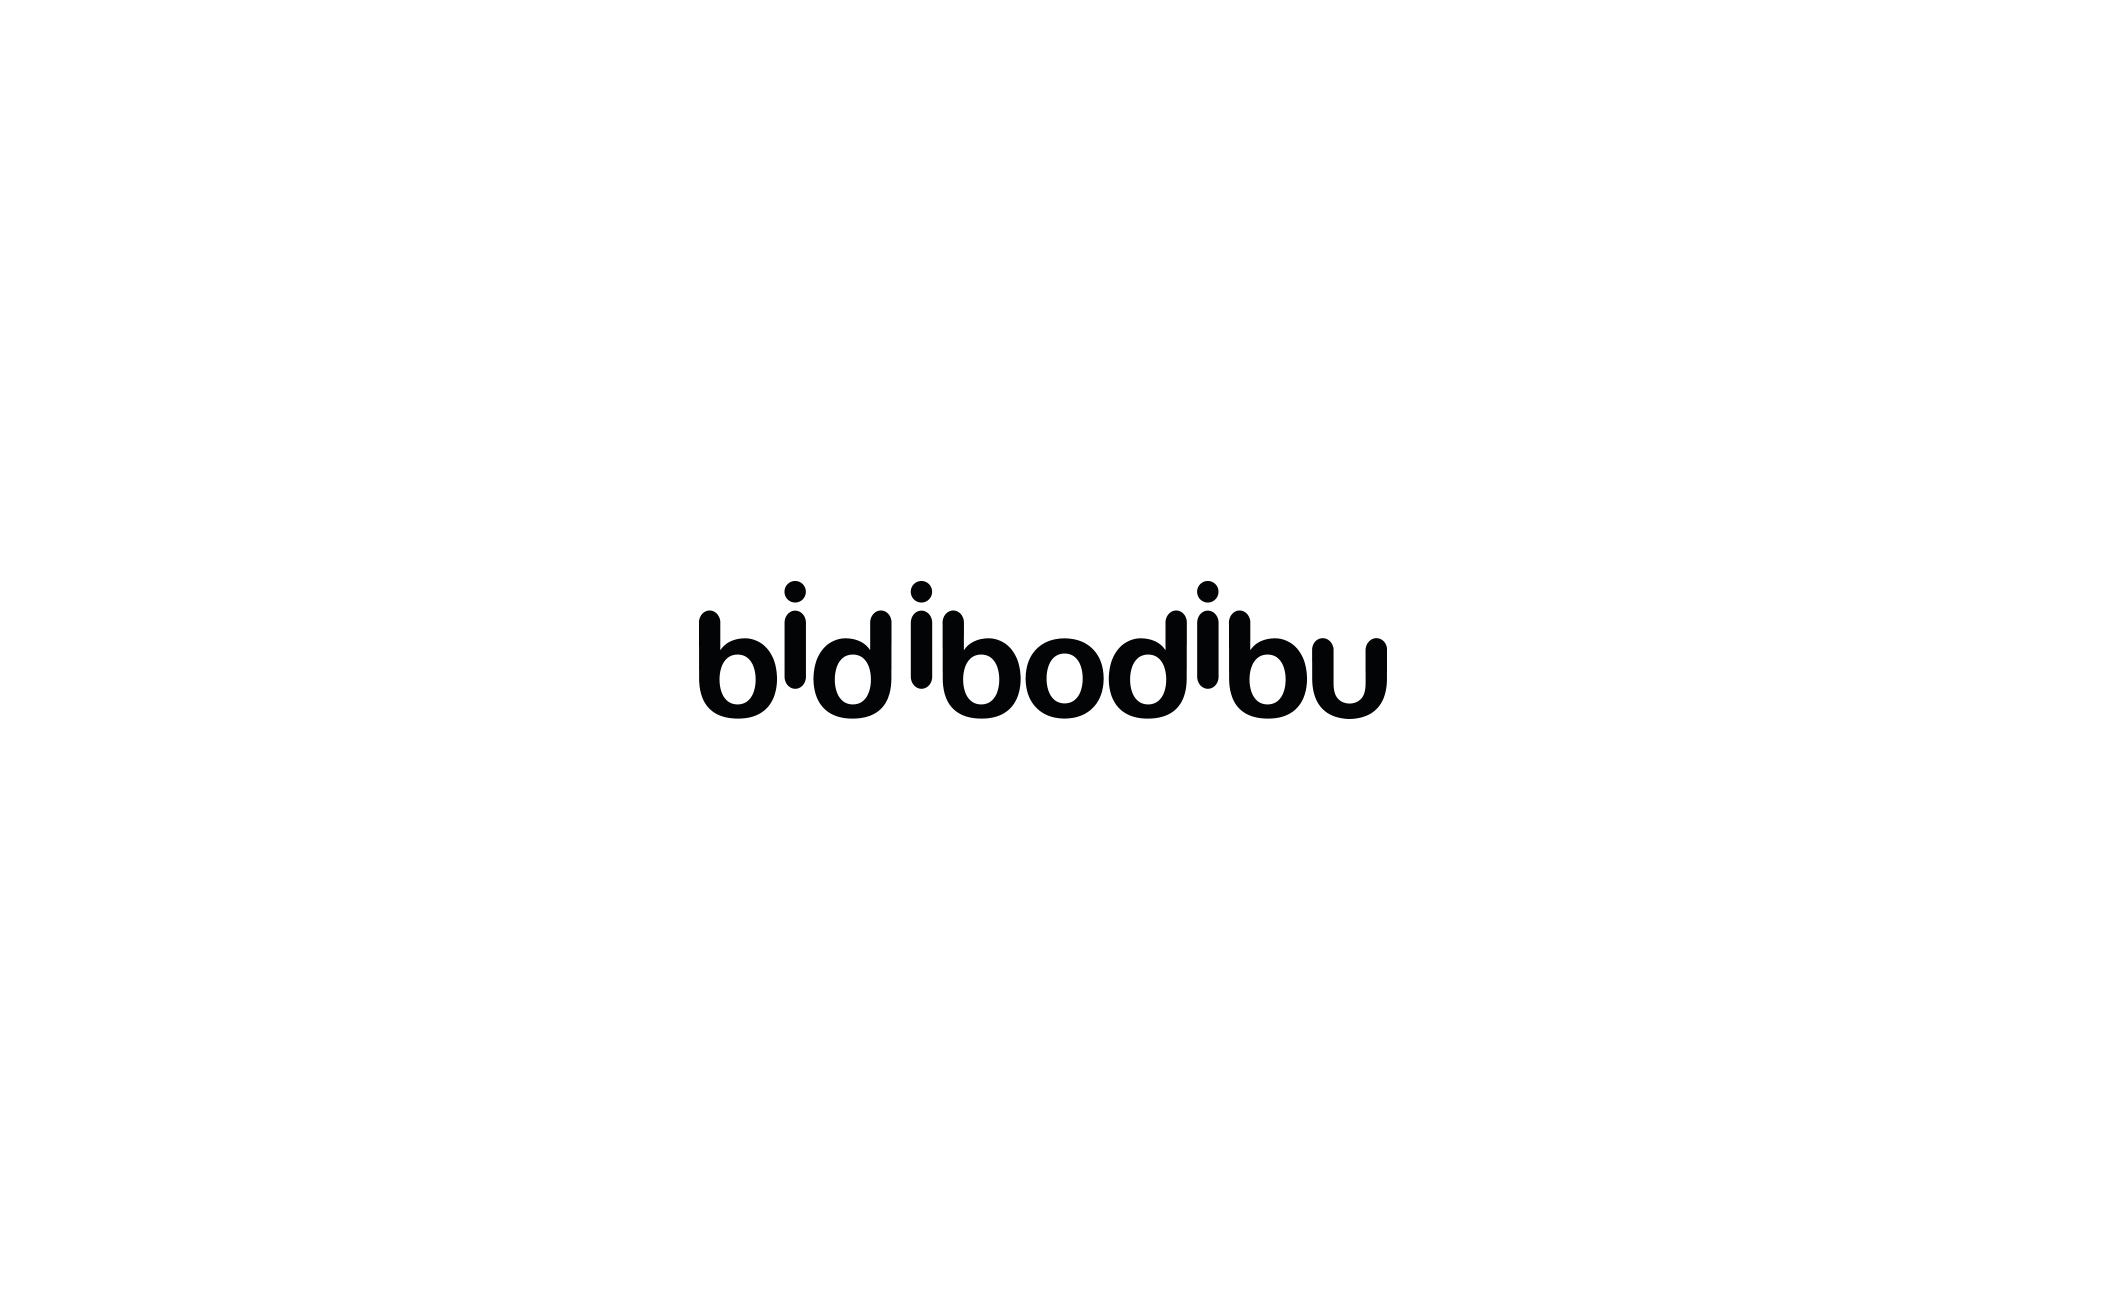 KD_LOGOS_2020_Bidibodibu